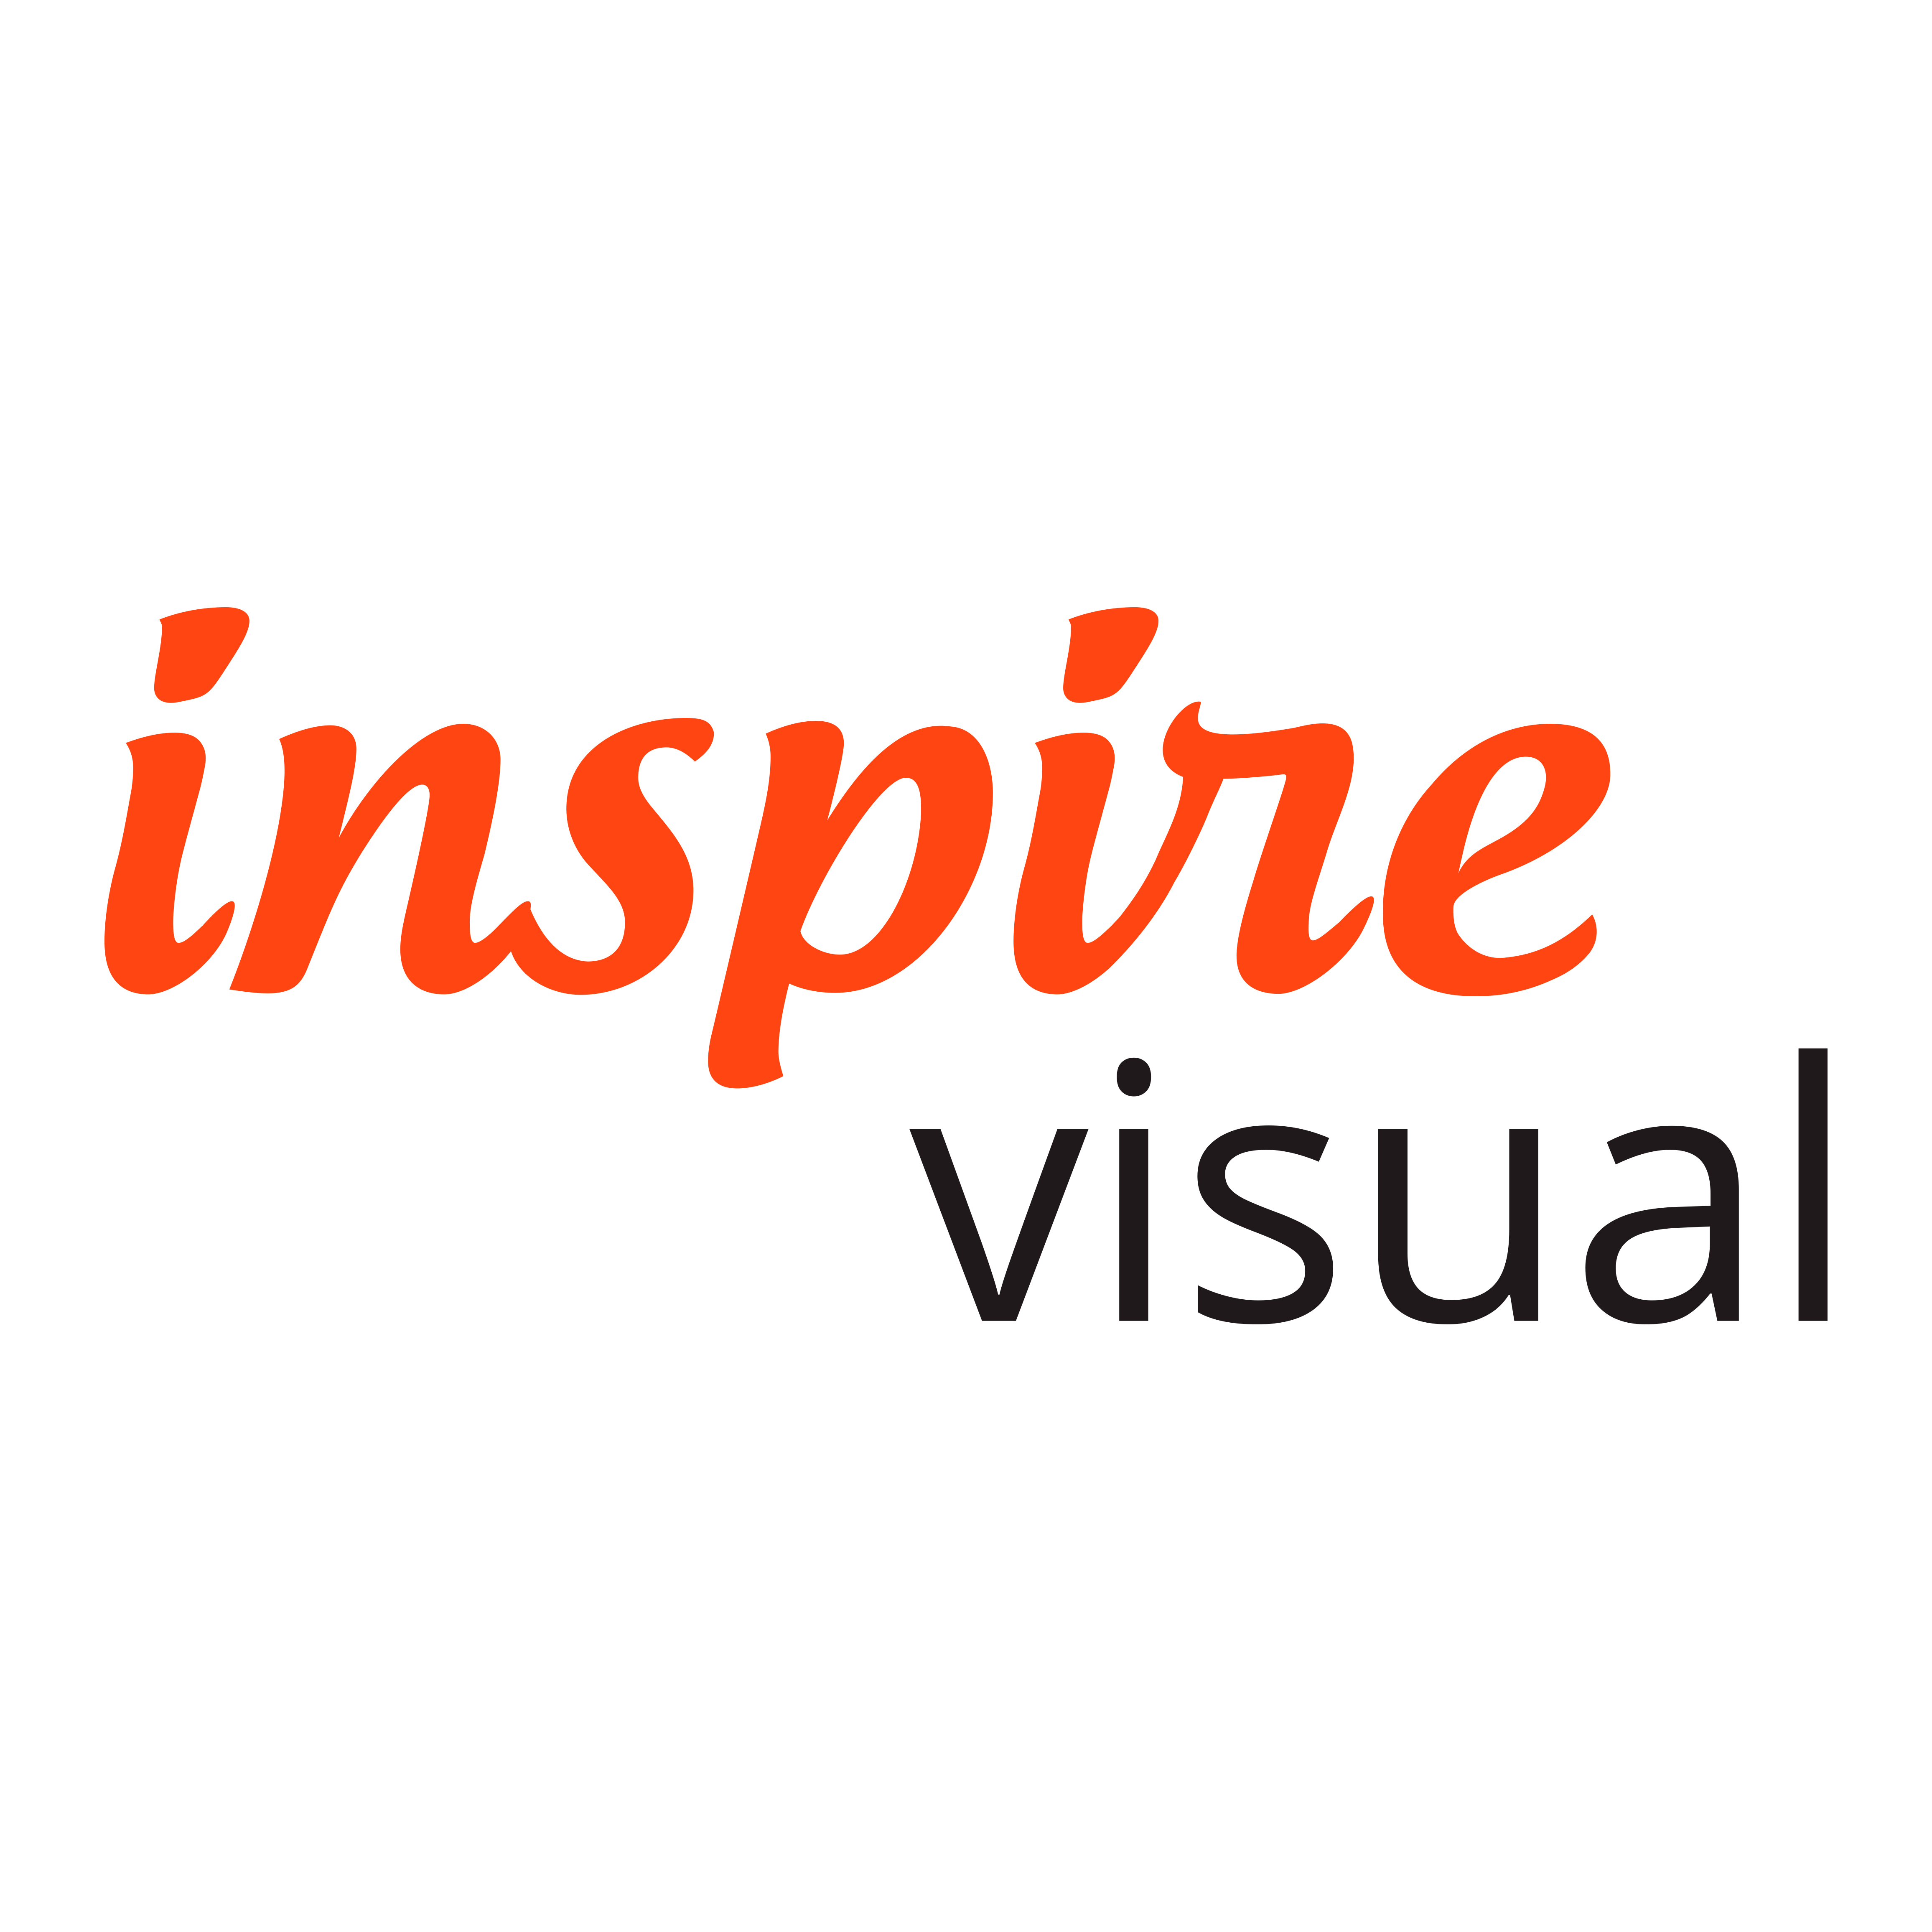 Inspire Visual Logo